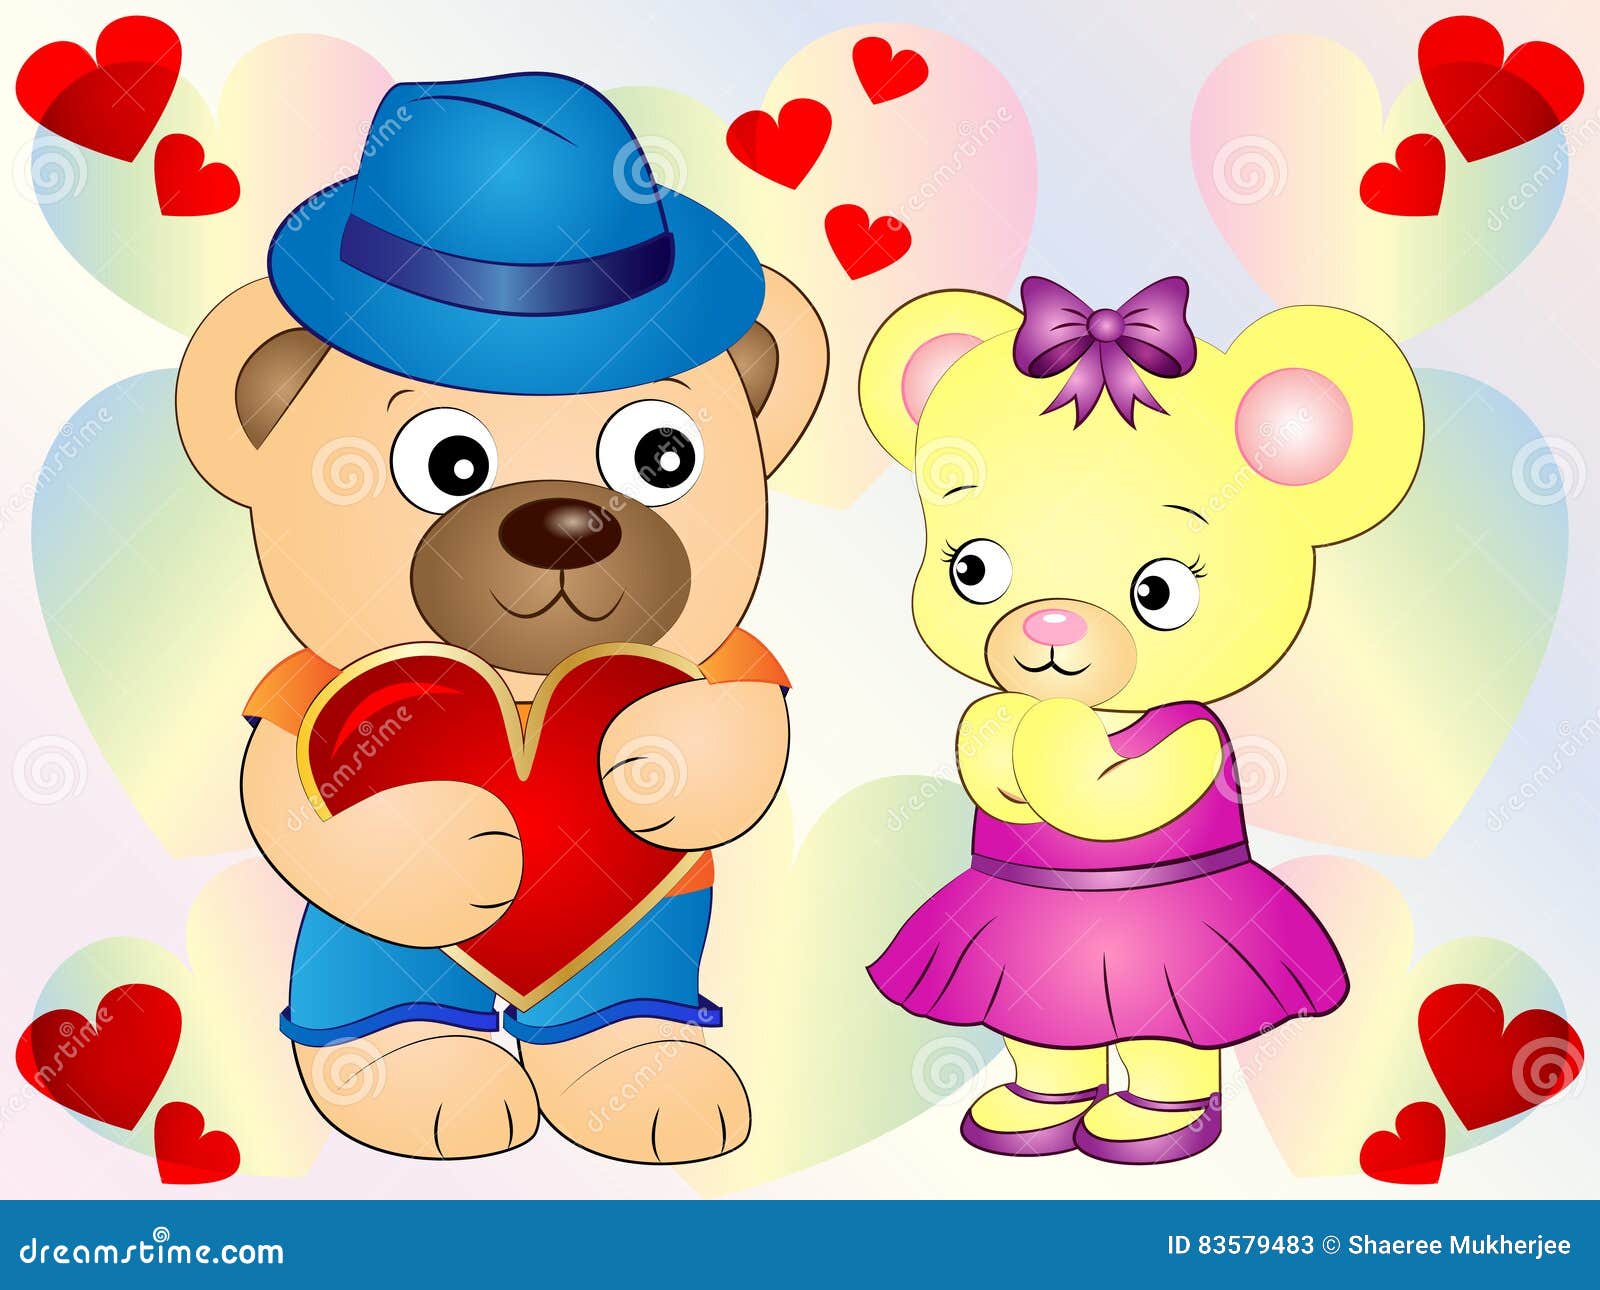 Cute Teddy Bear Love Wallpaper Stock Vector - Illustration of cute ...